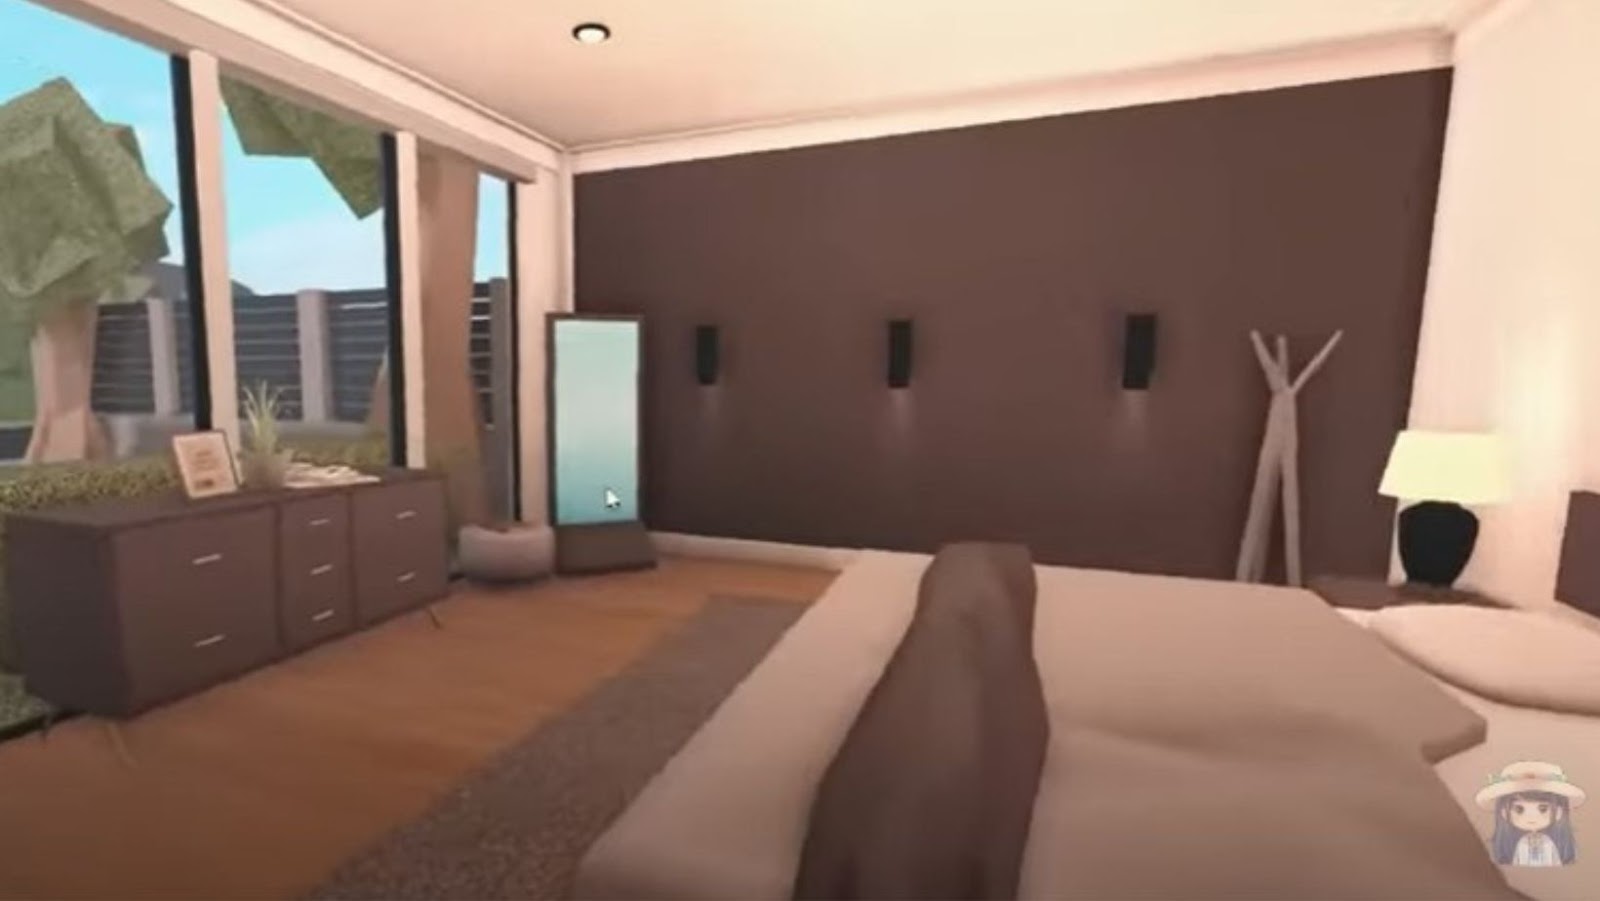 bloxburg living room ideas